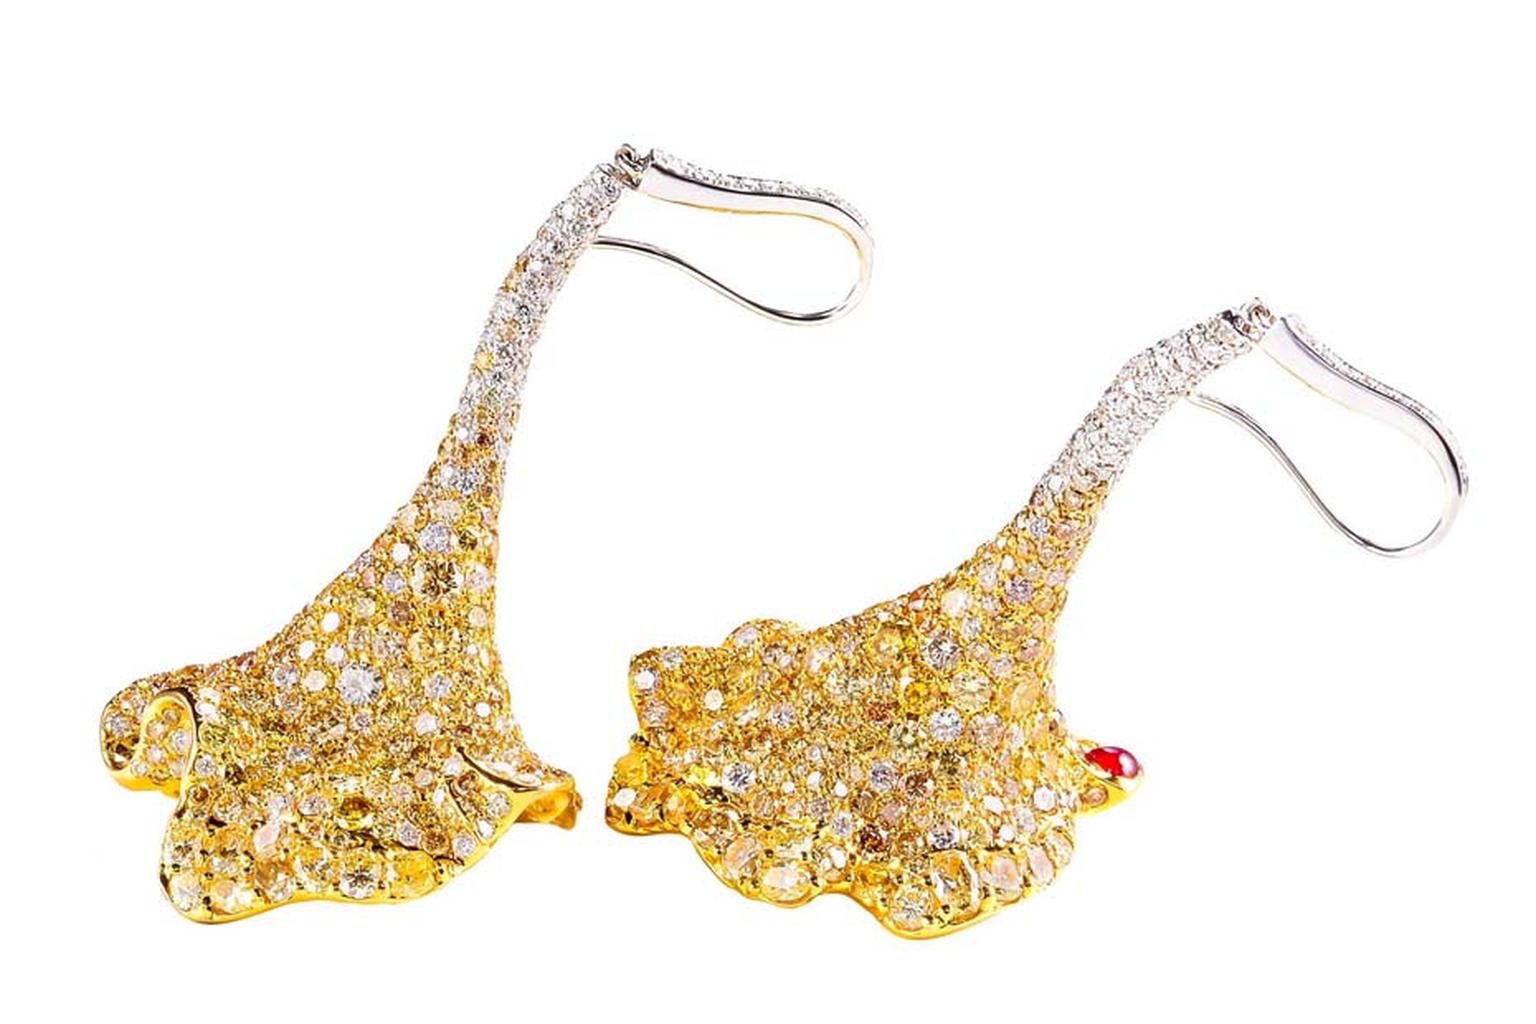 Chara Wen earrings with diamonds.